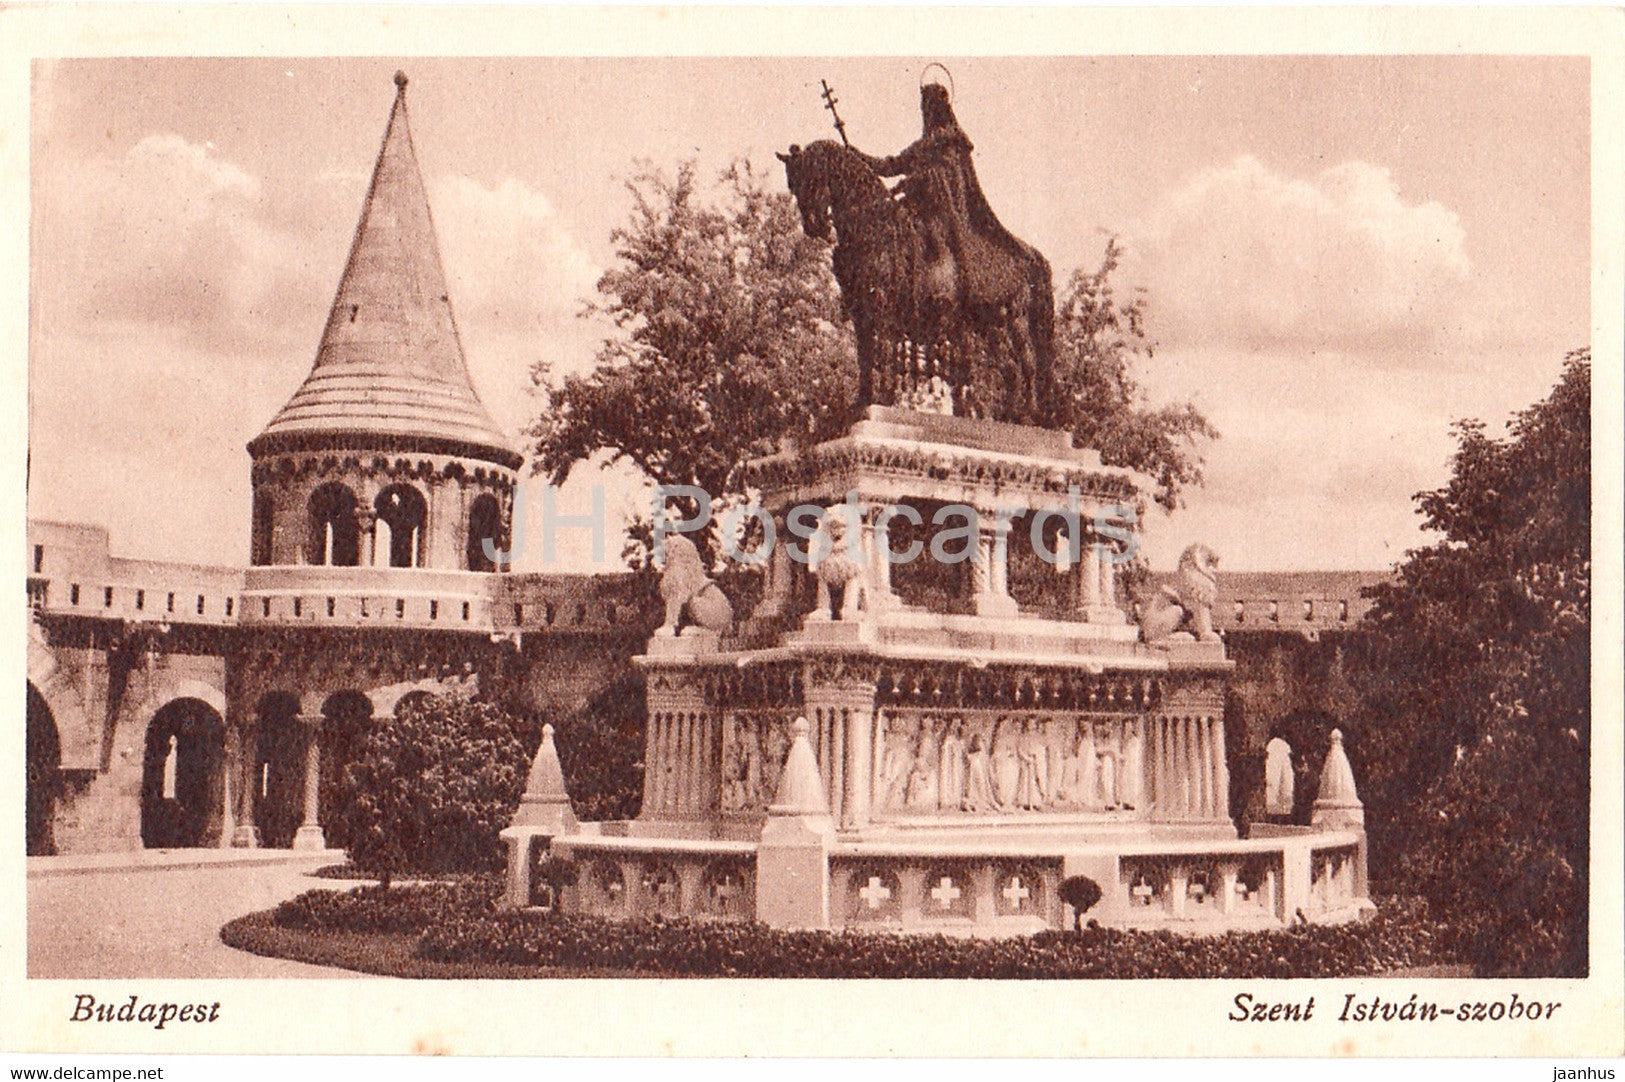 Budapest - Szent Istvan szobor - Sankt Stefans monument - monument - old postcard - Hungary - unused - JH Postcards